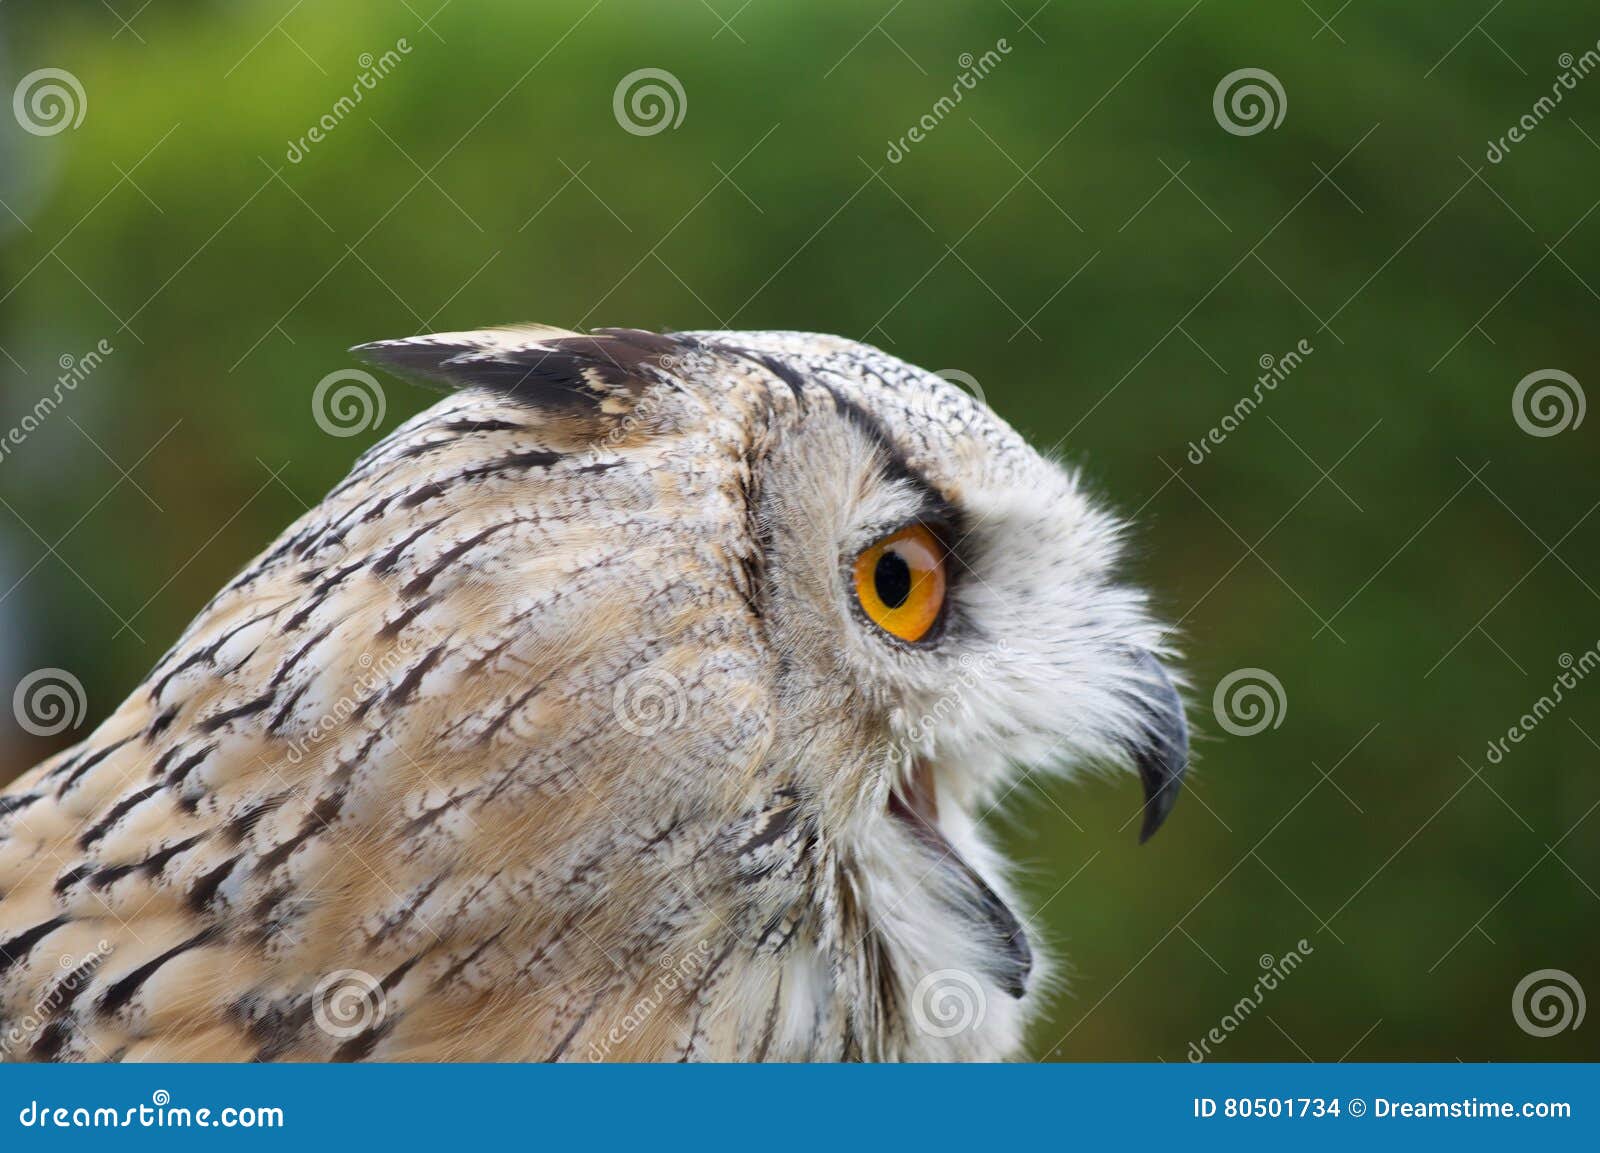 Snowy Owl stock photo. Image of poses, shots, prey, bird - 80501734